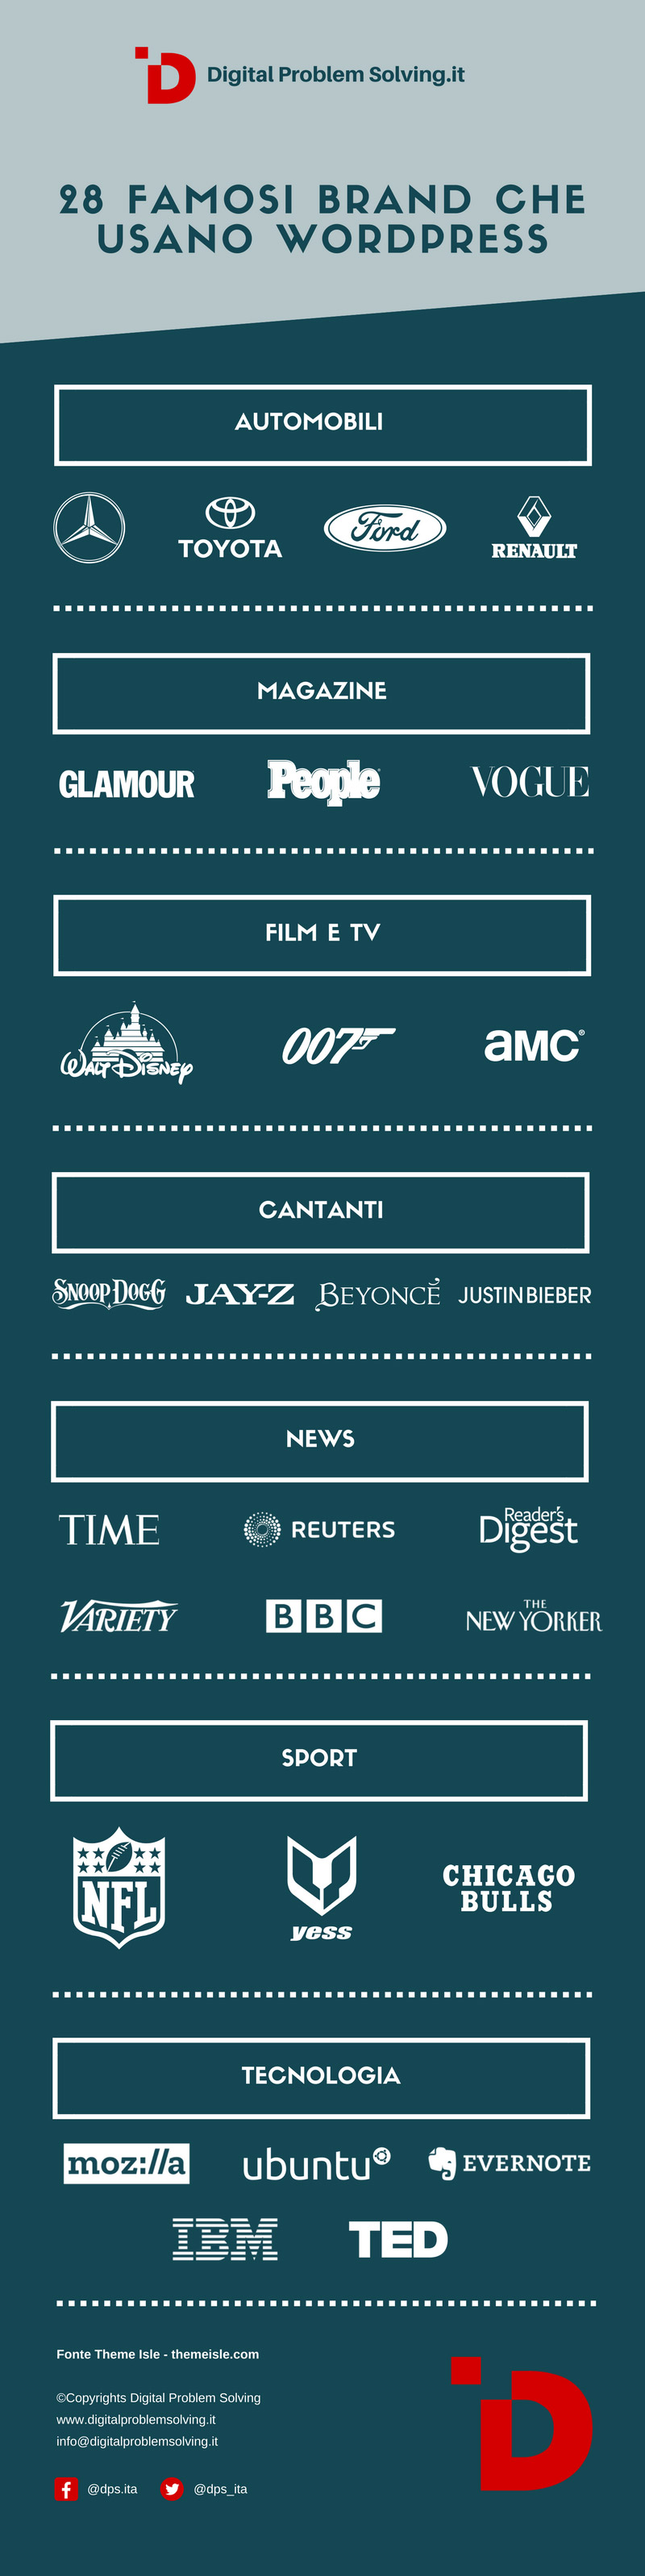 Infografica, 28 famosi brand che usano WordPress